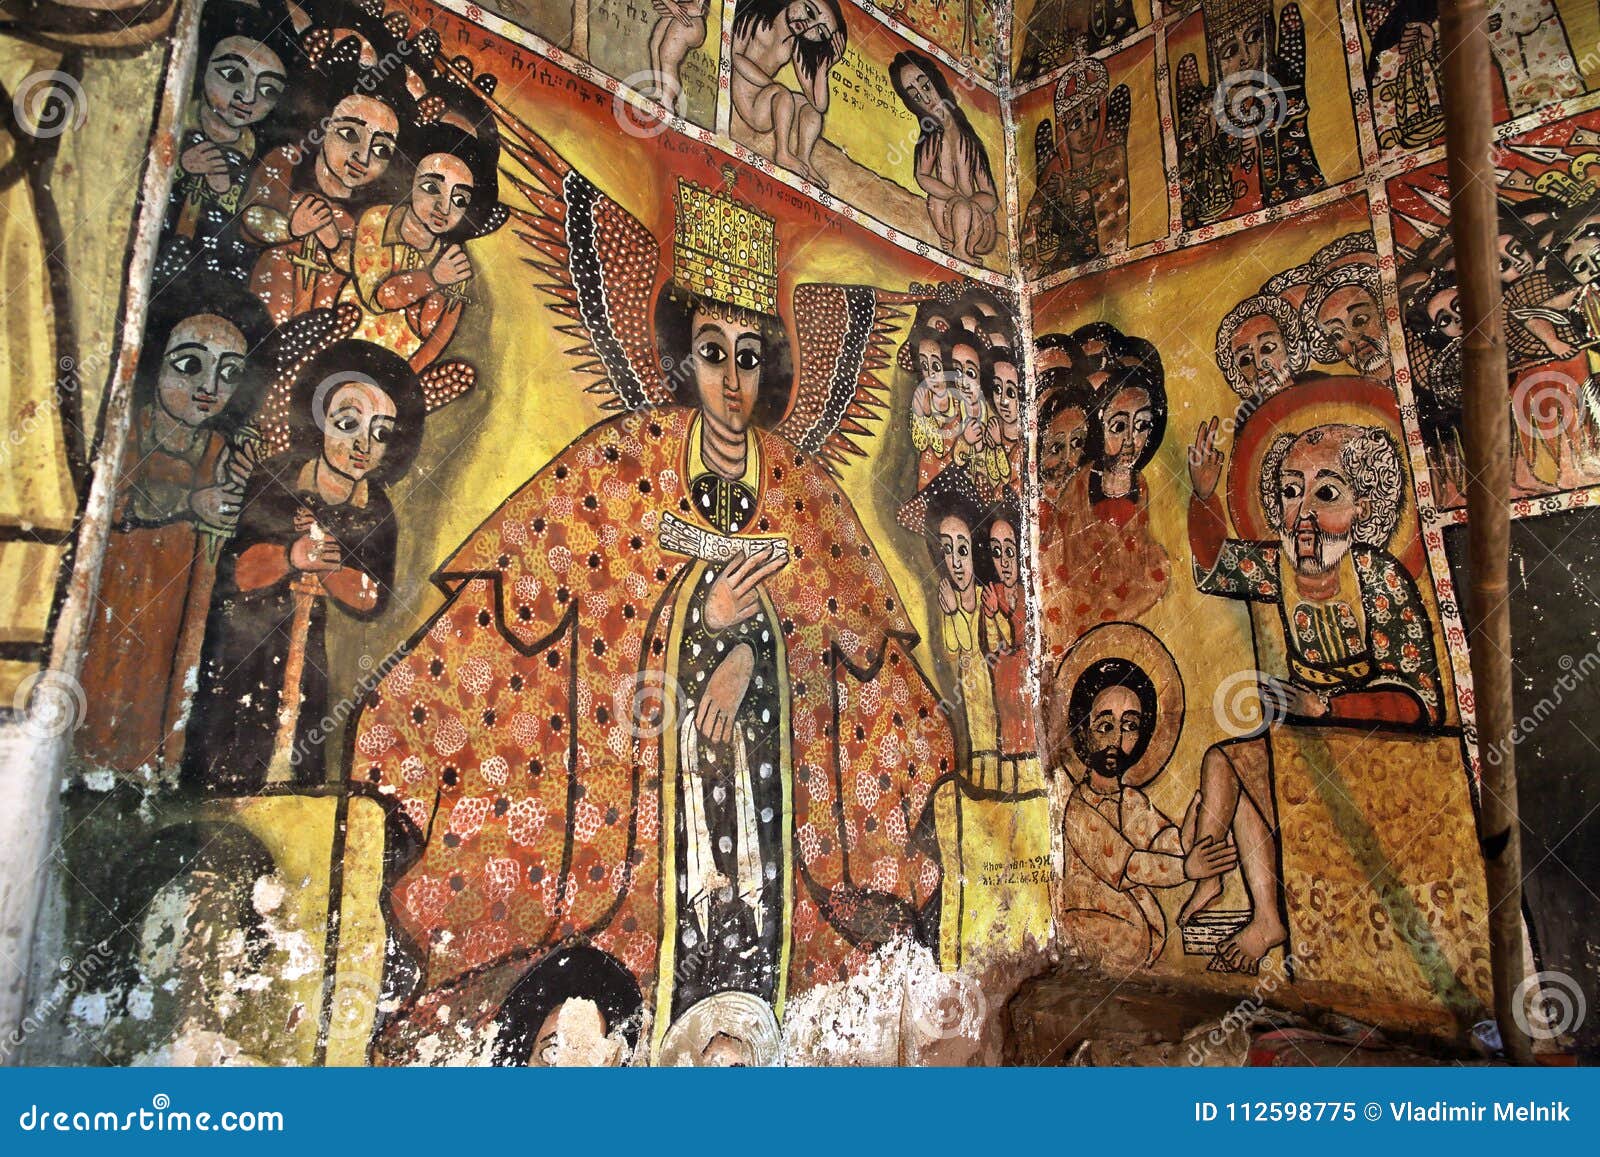 iconographic scenes in maryam papasetti church in ethiopia